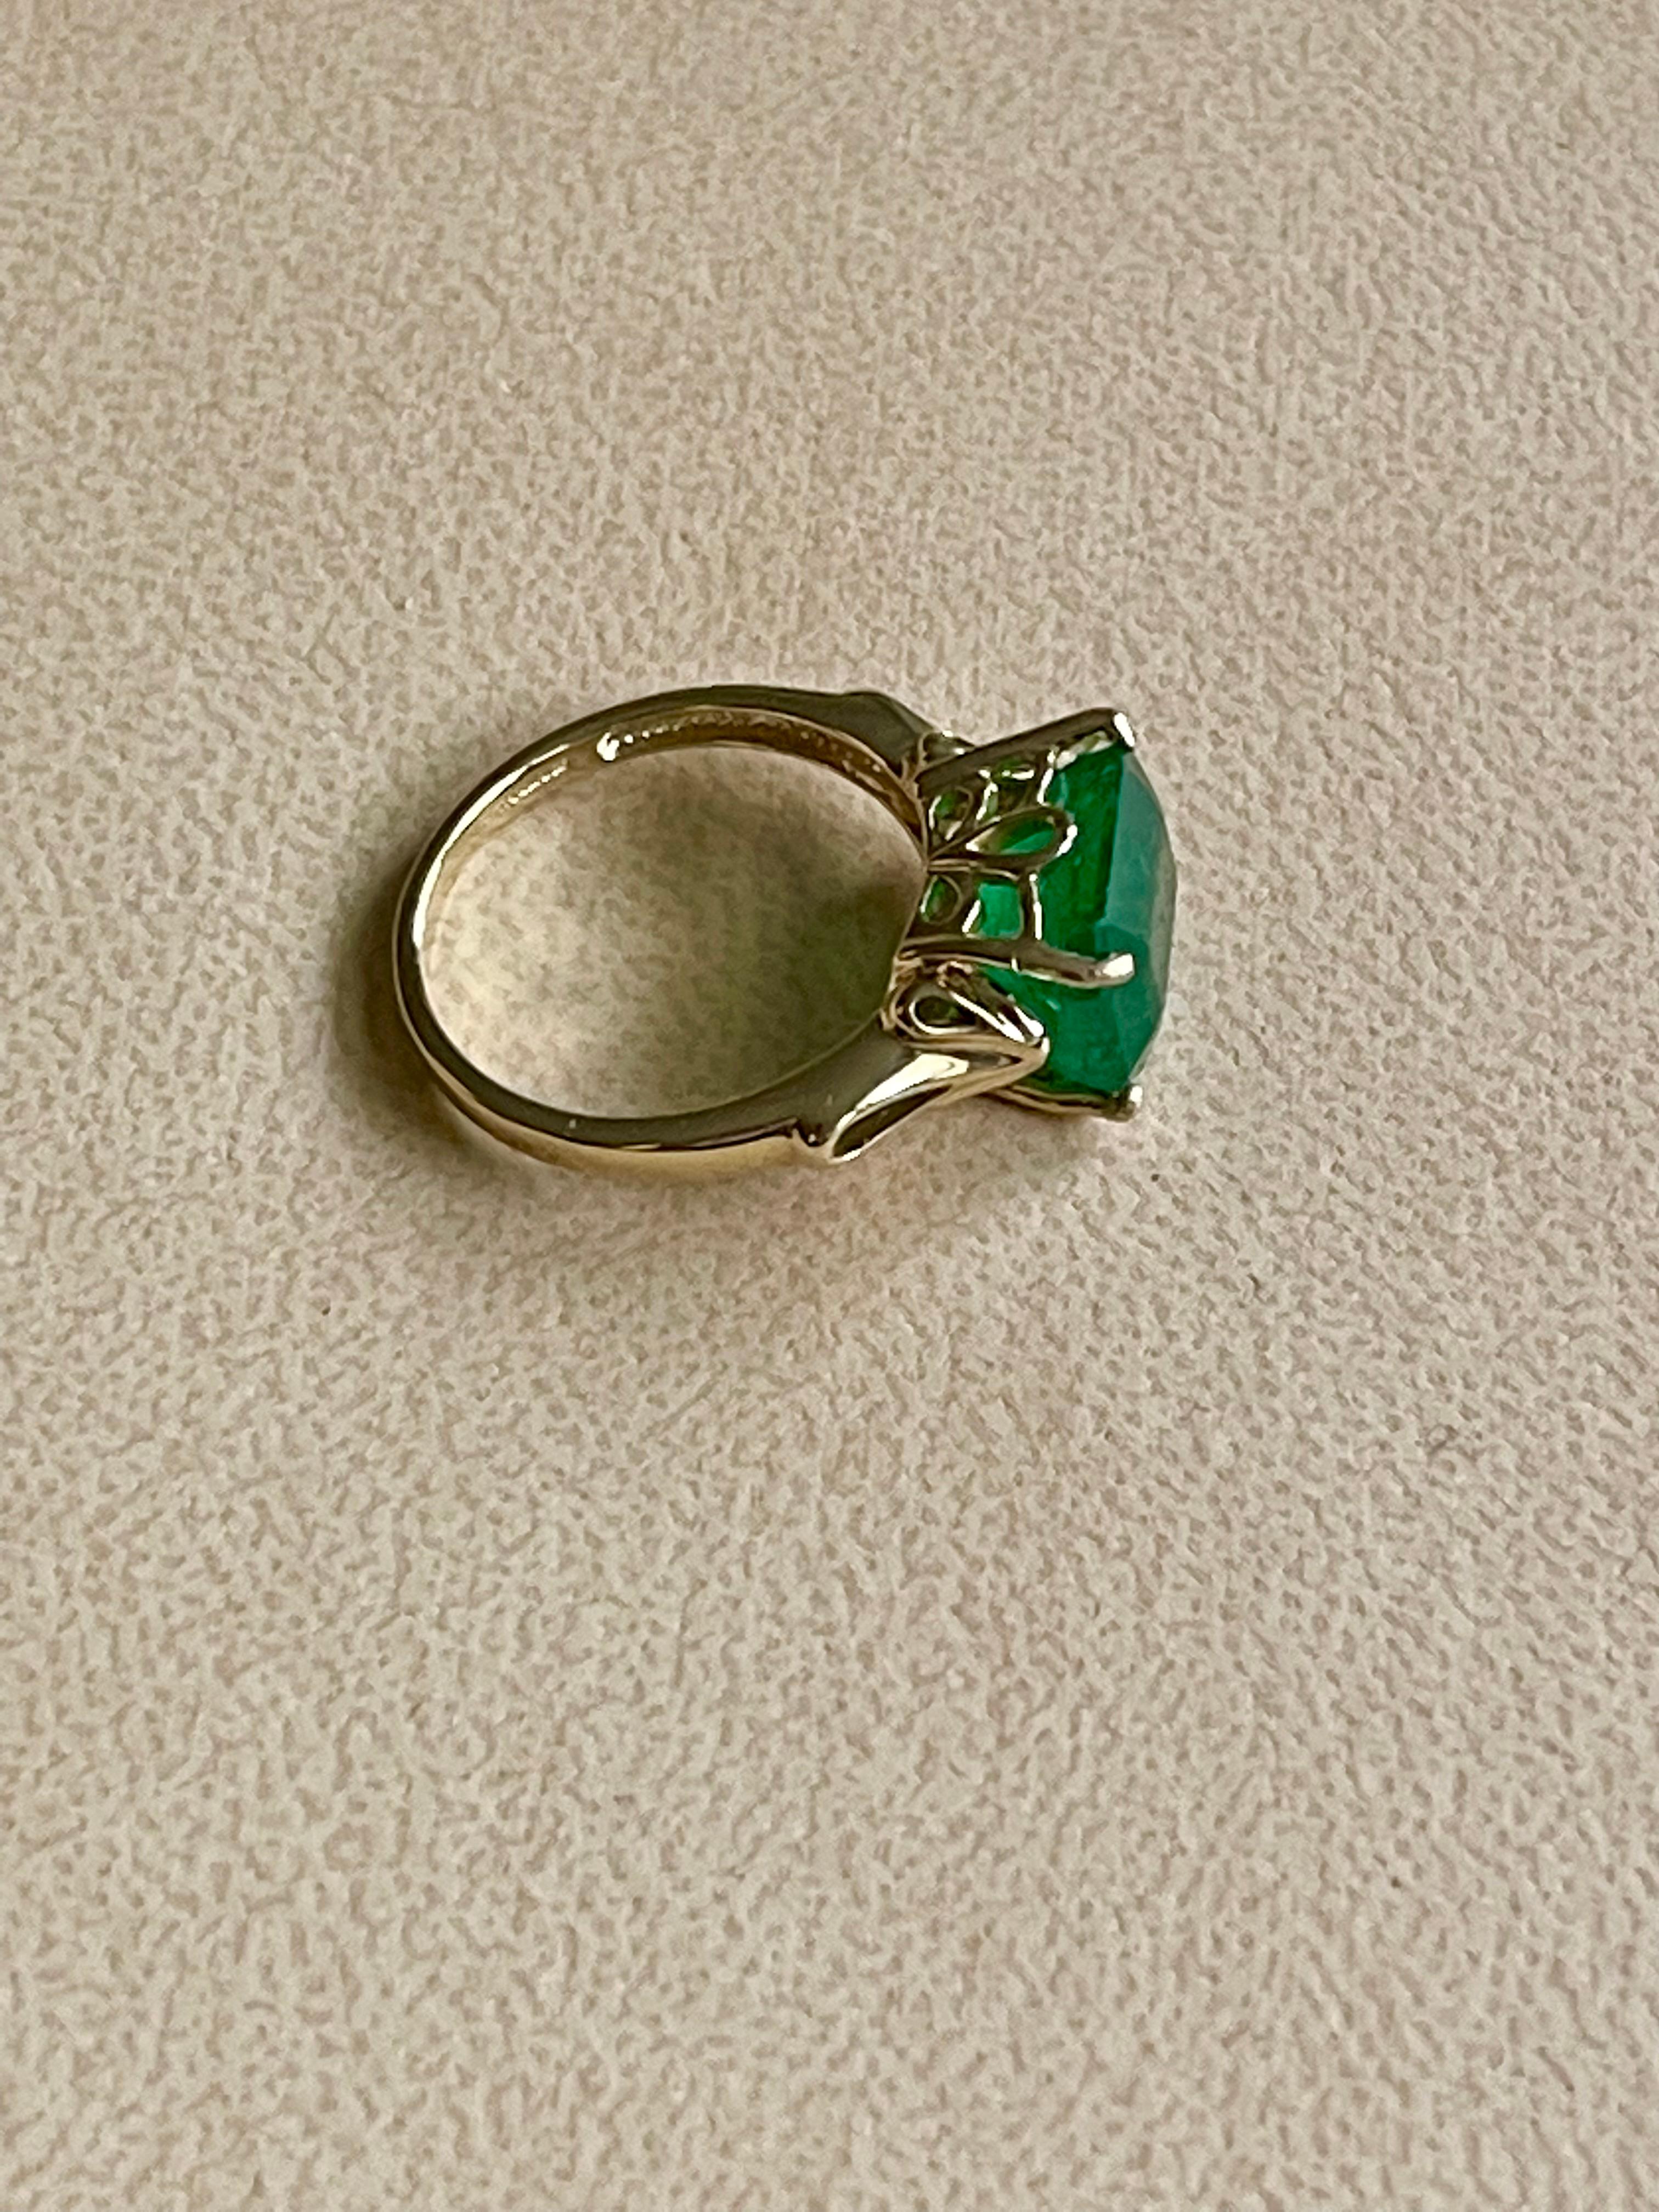 5 Carat Natural Emerald Cut Emerald Ring 14 Karat Yellow Gold Vintage 6